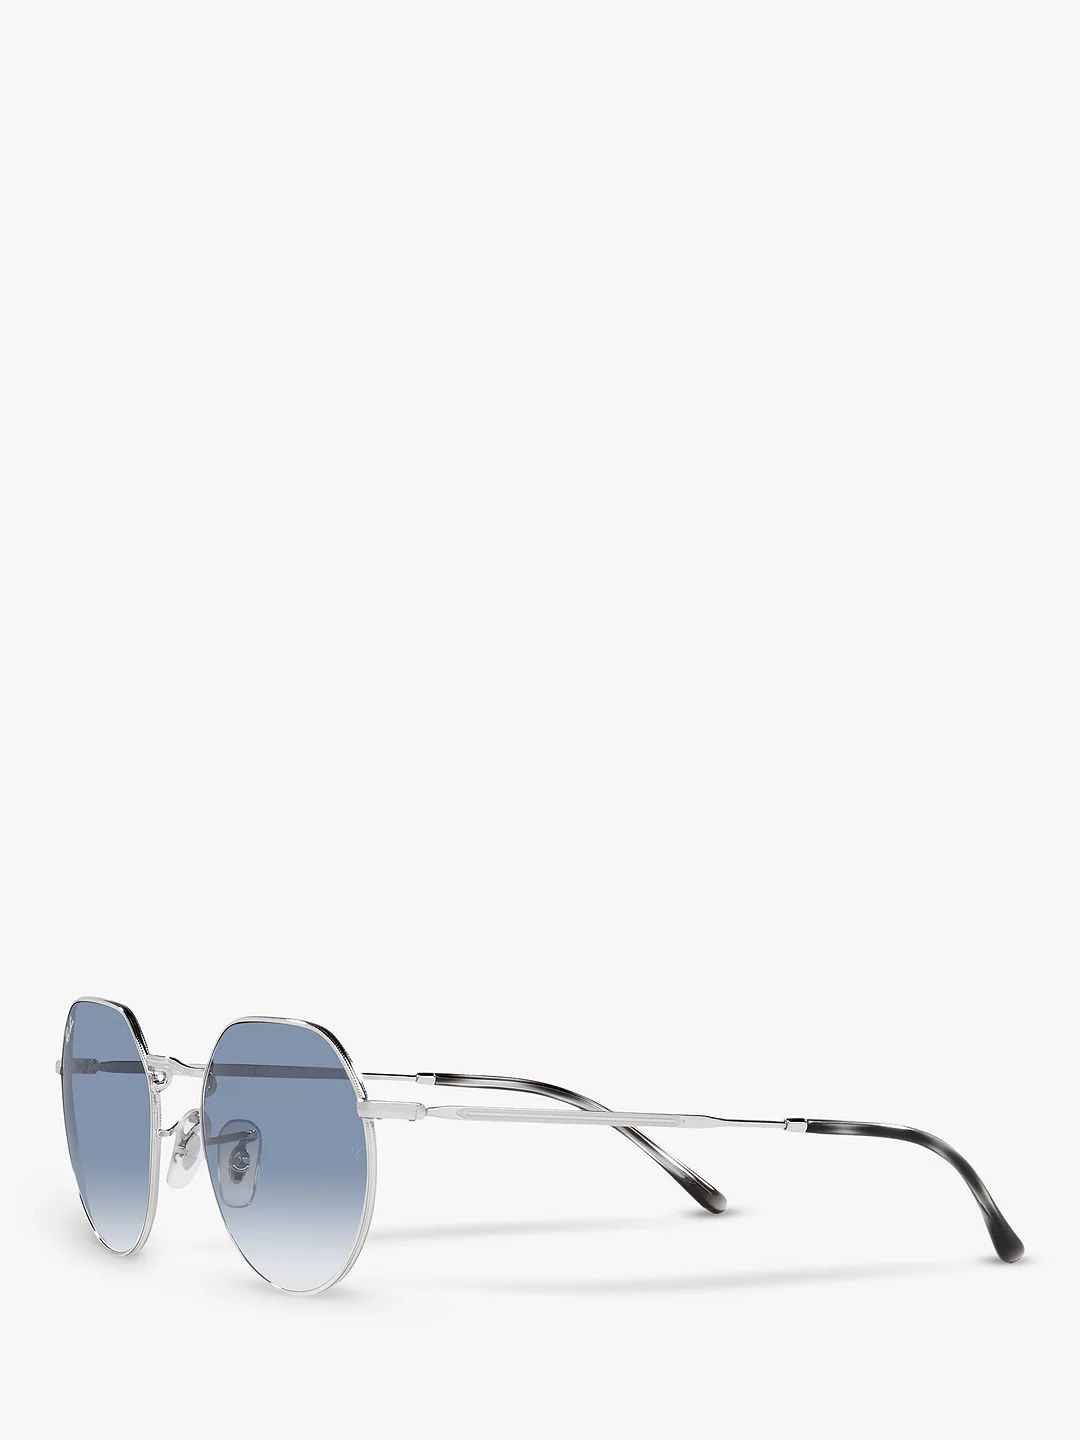 Ray-Ban RB3565 Jack Unisex Metal Hexagonal Sunglasses, Silver/Light Blue Gradient | John Lewis (UK)